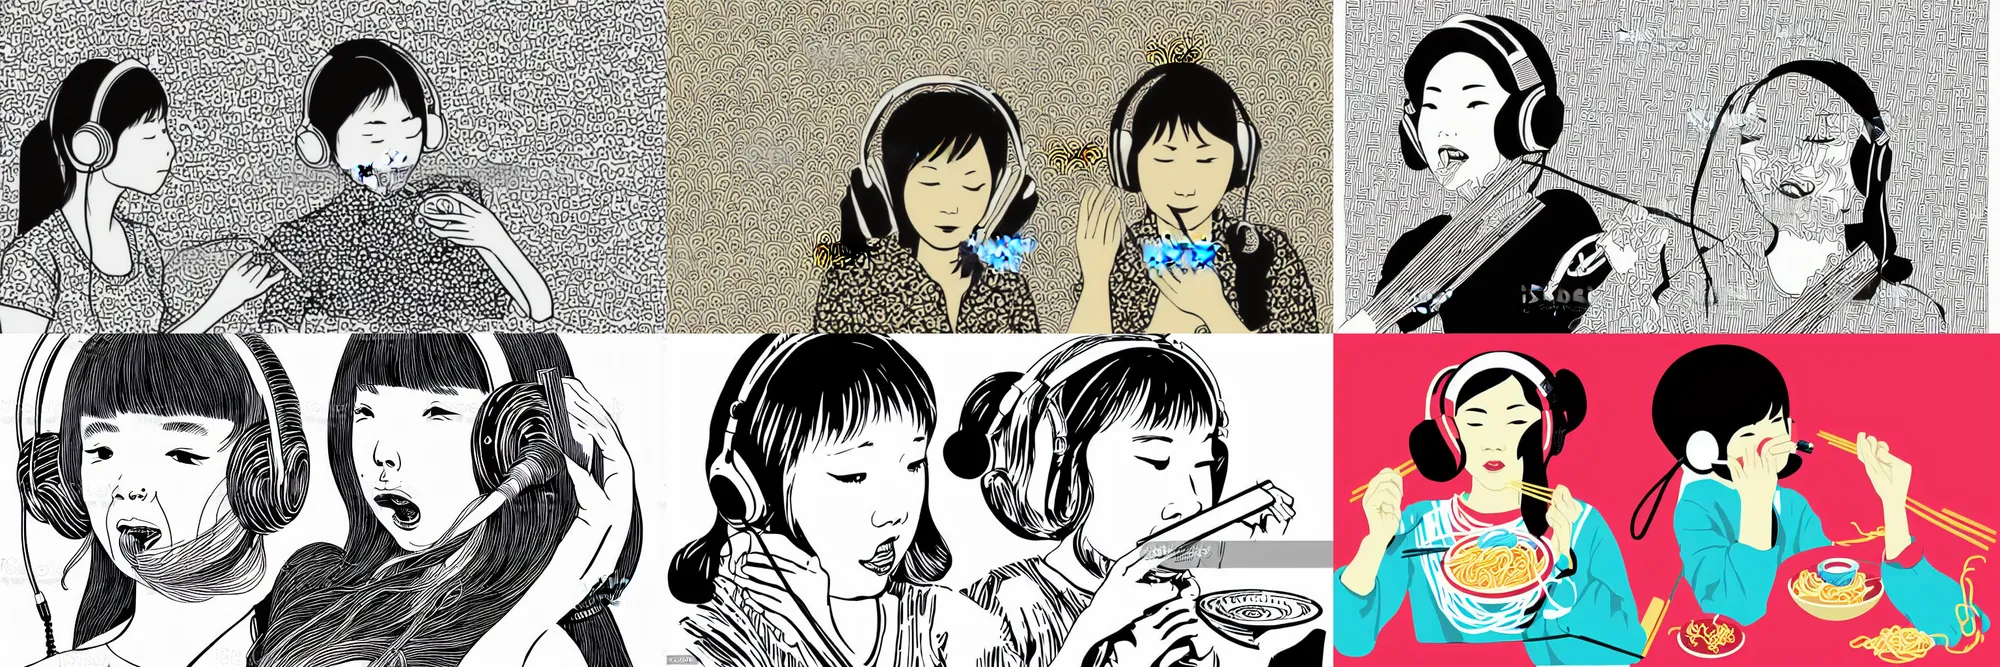 Prompt: vector art illustration of Japanese girl wearing headphones, eating noodles, 4 color print, 1970s